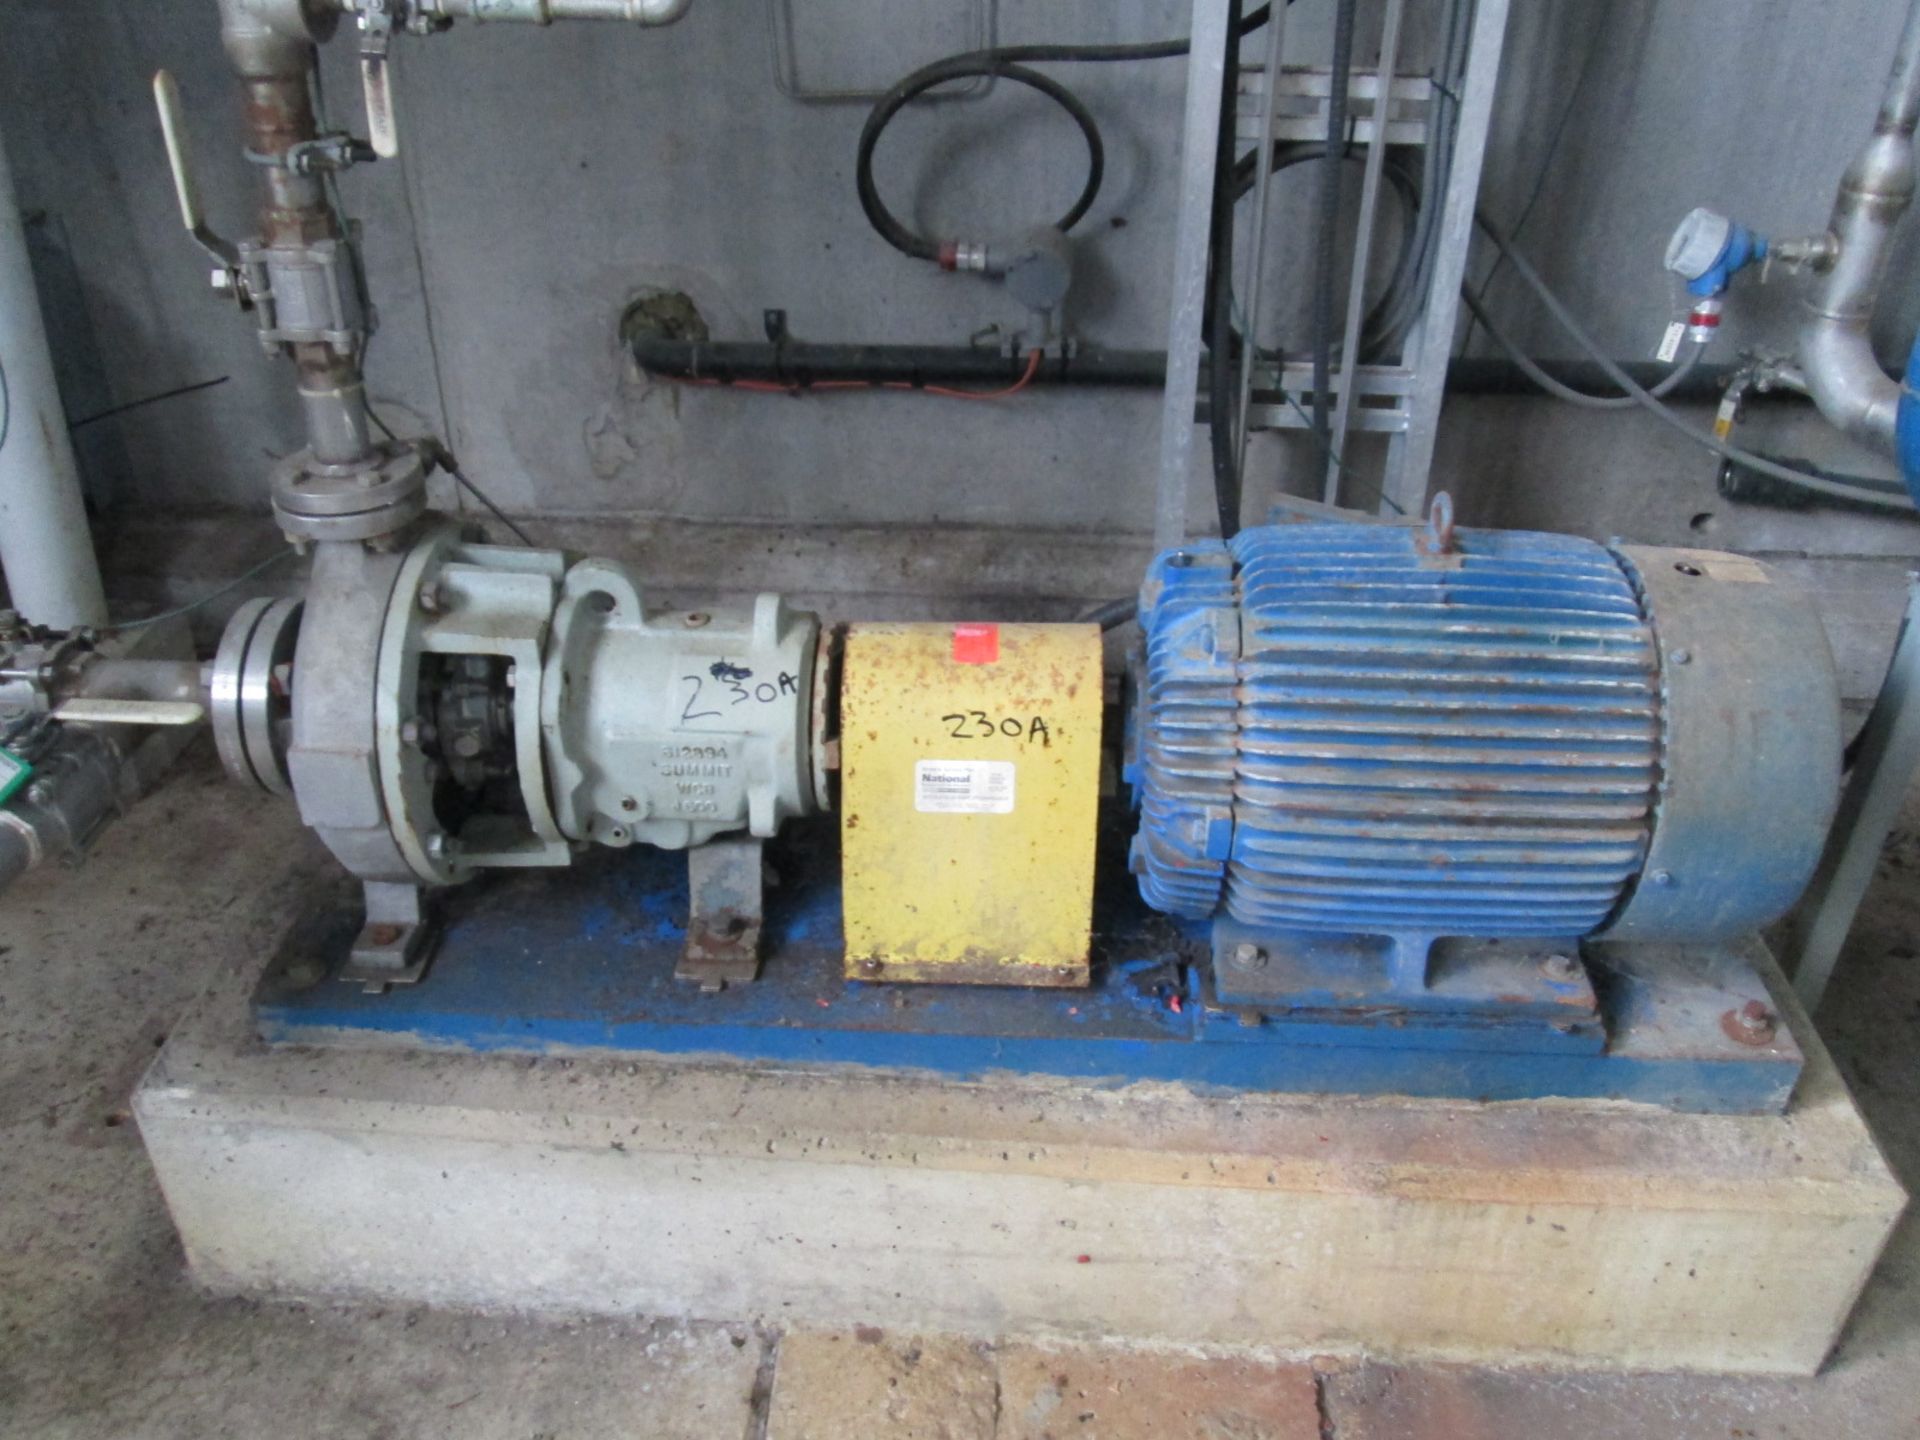 SUMMIT  Centrifugal Pump, WCB J600 number 612894 with a 30HP 575v pump. Brochure